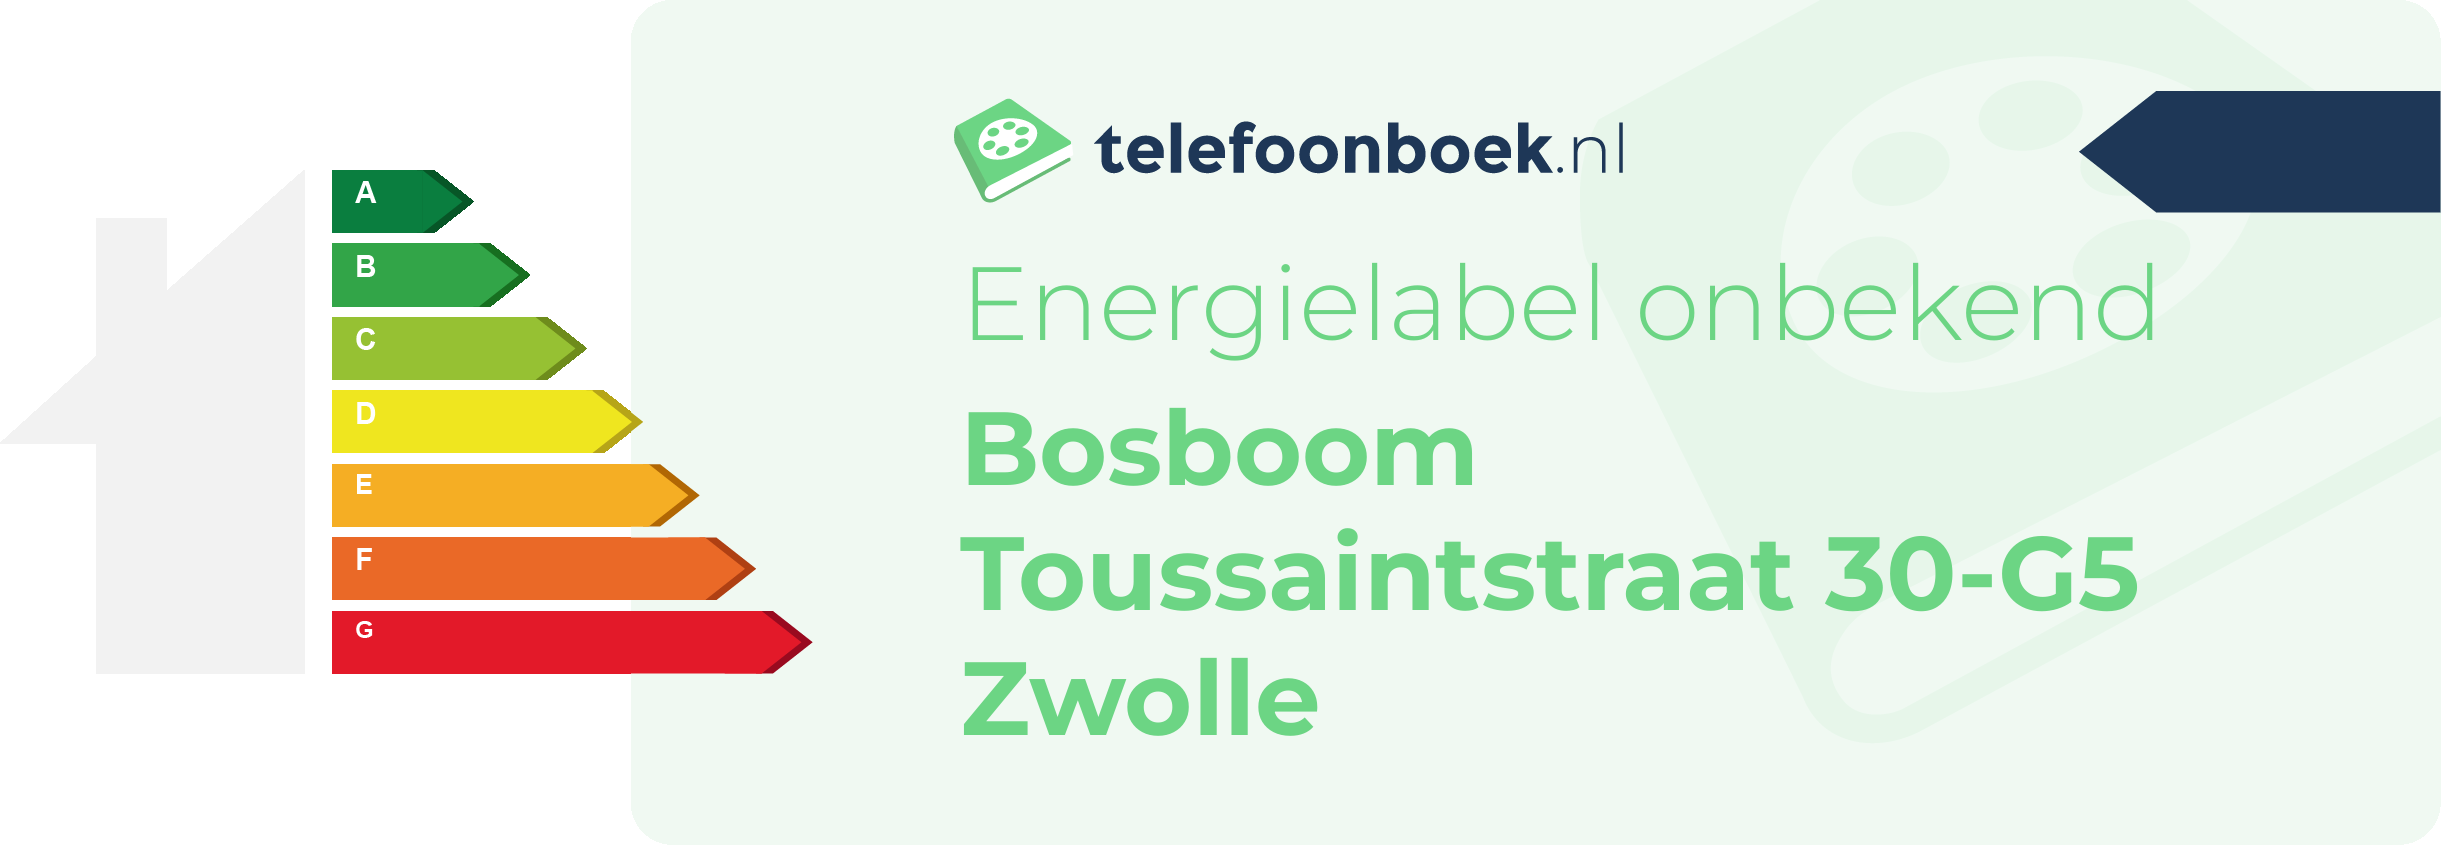 Energielabel Bosboom Toussaintstraat 30-G5 Zwolle